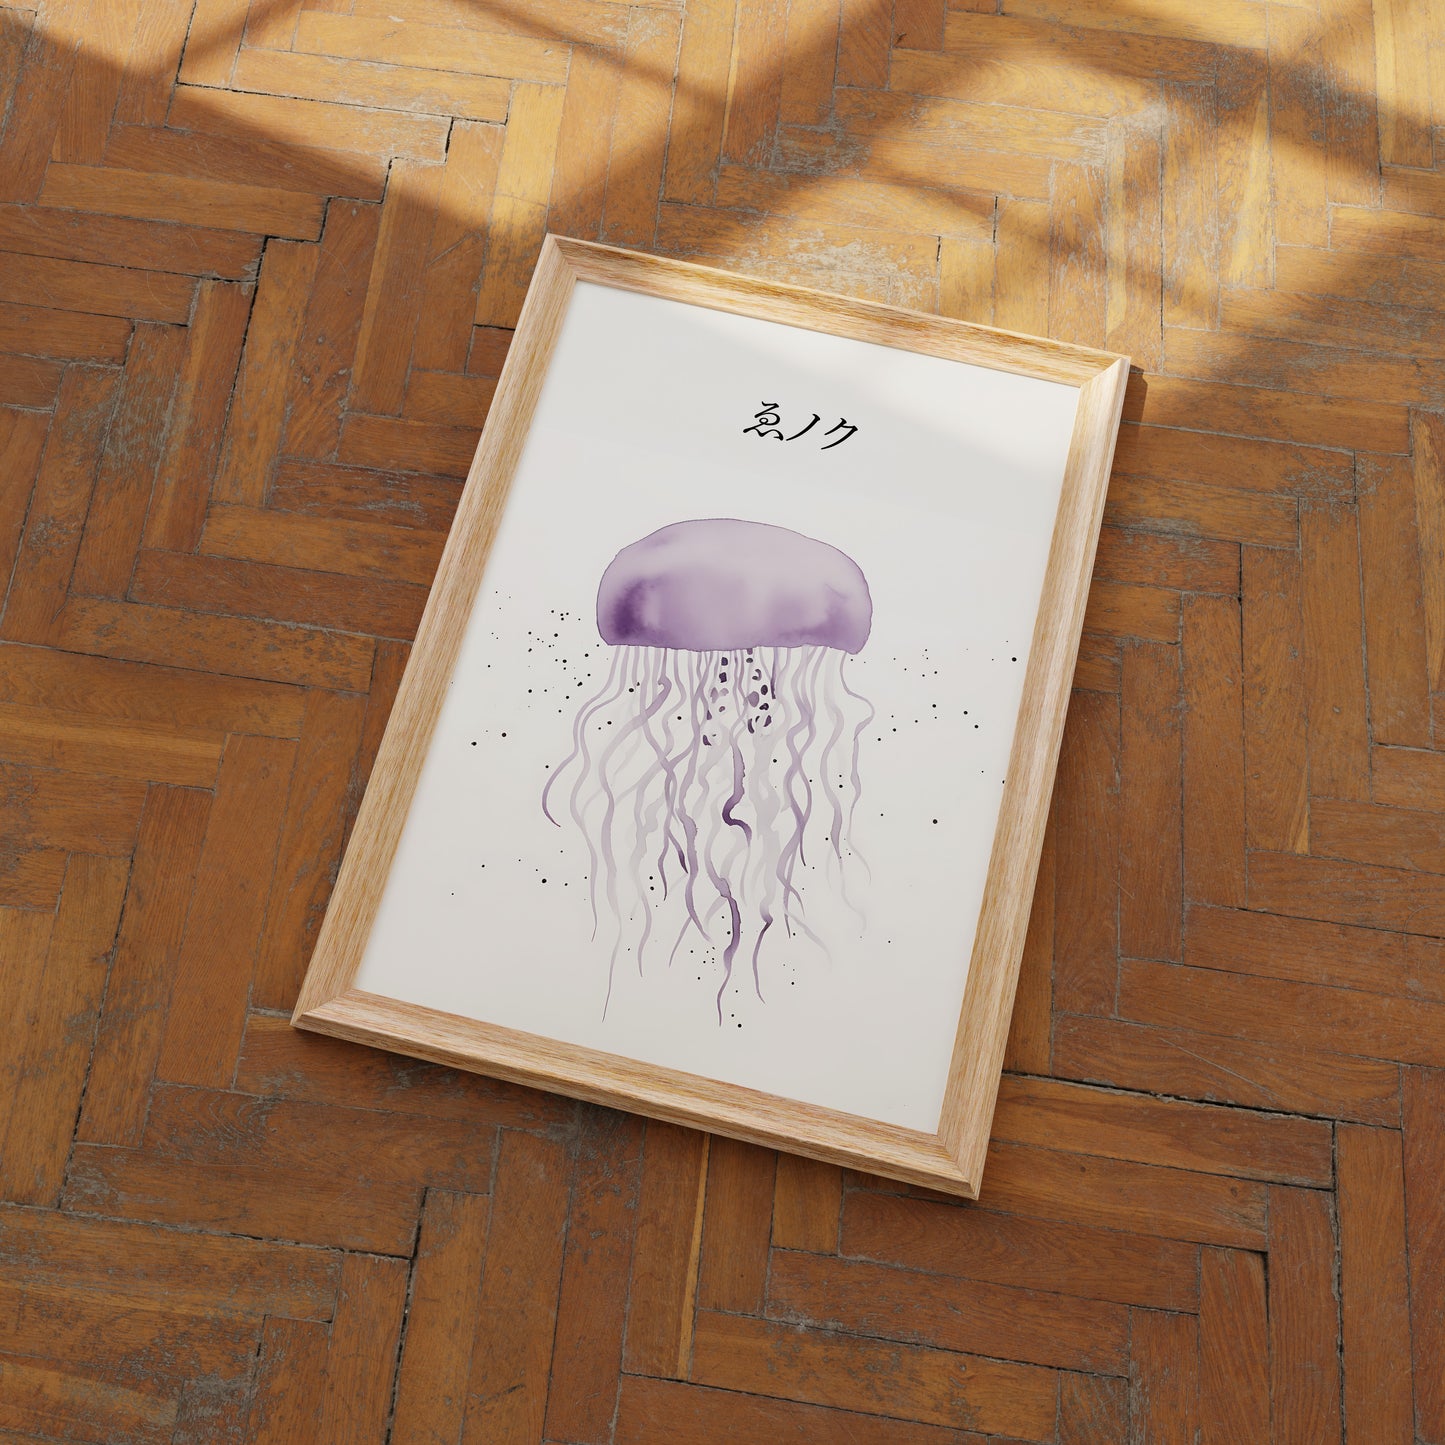 Framed jellyfish illustration on a herringbone wood floor.